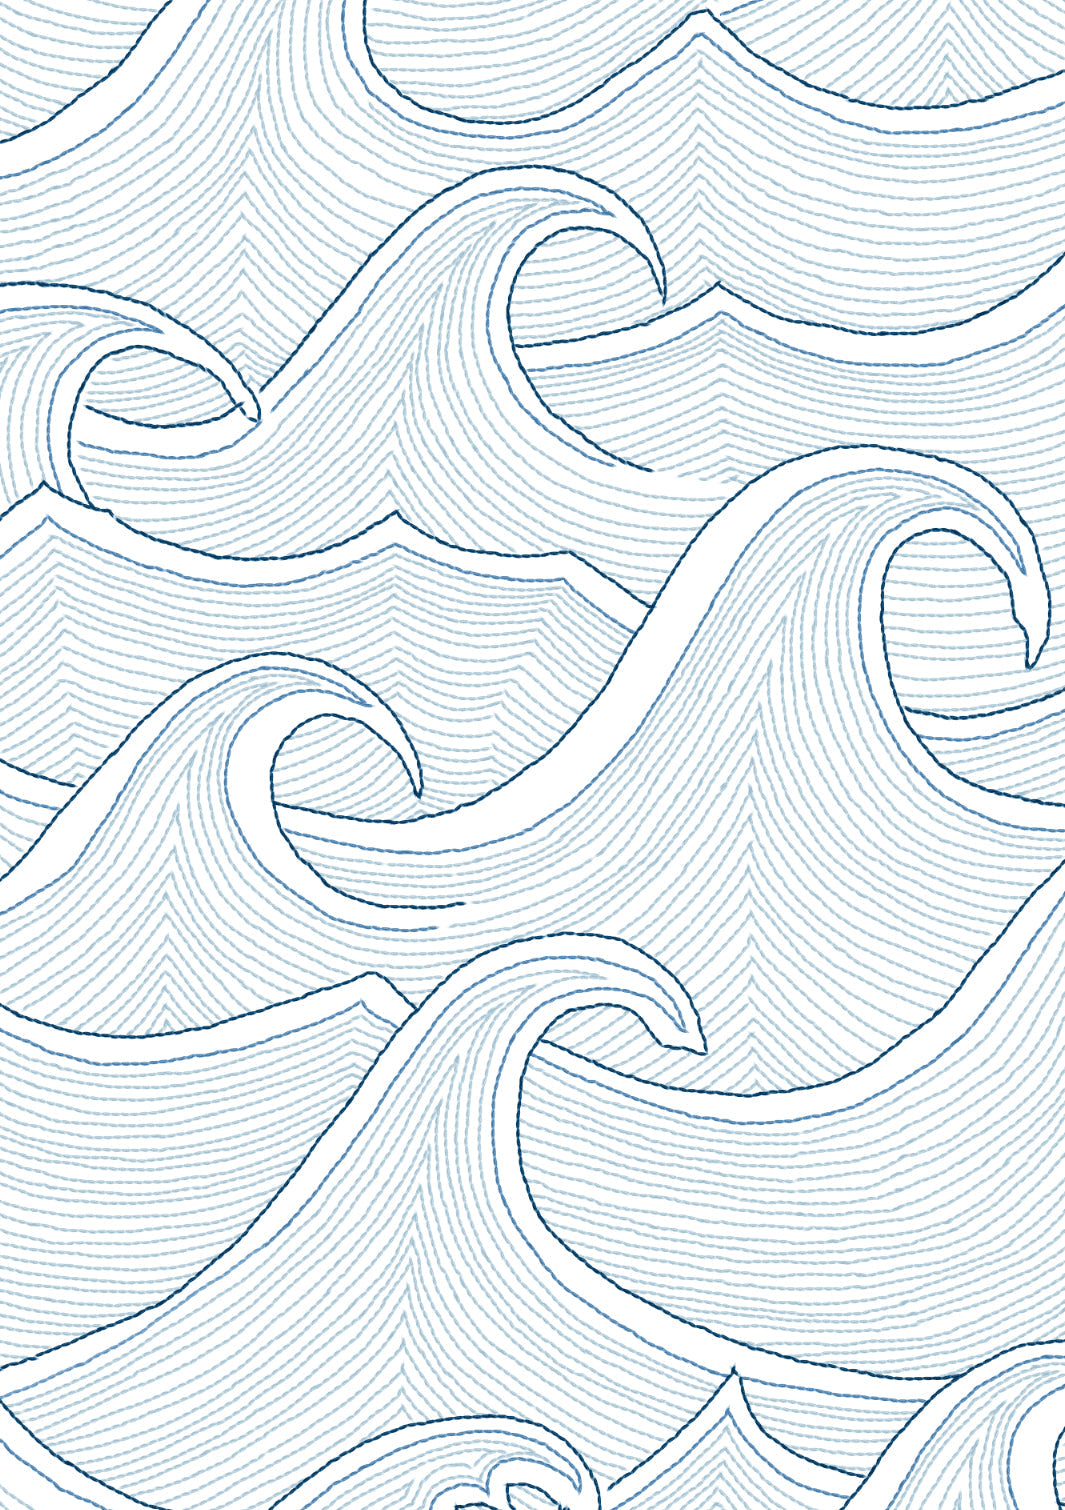 'Waves' Wallpaper by Lingua Franca - White